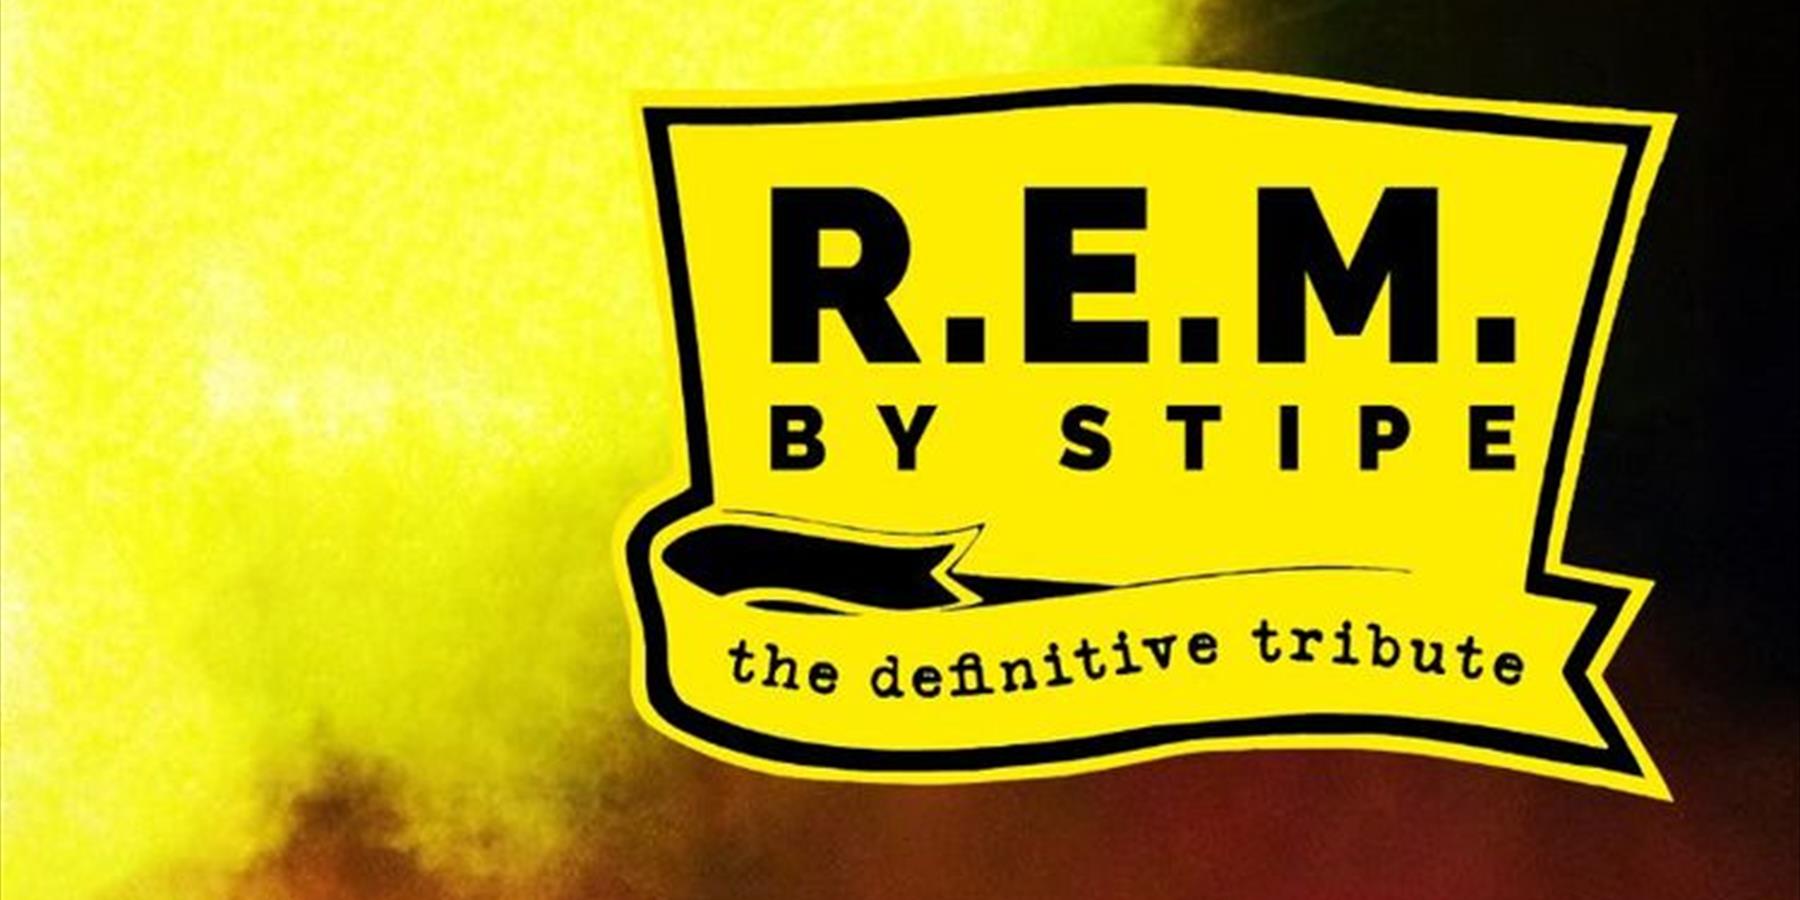 R.E.M. by Stipe